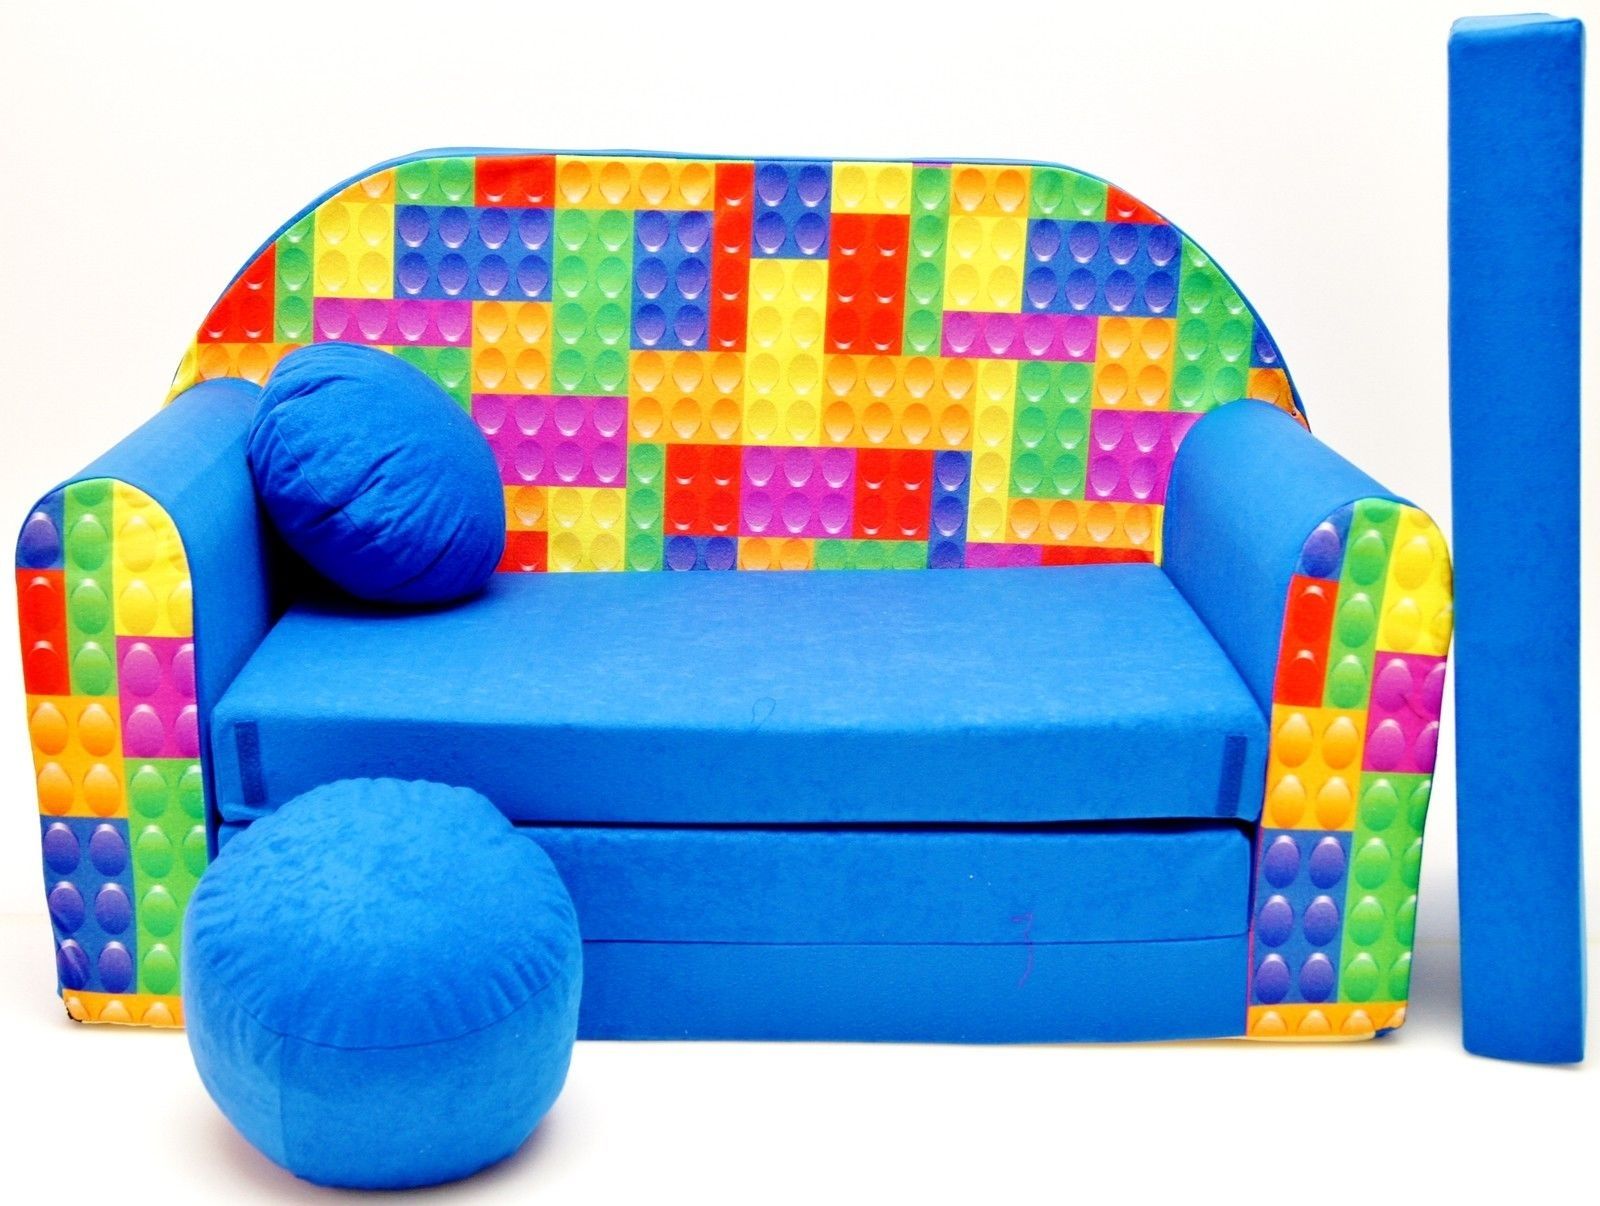 Luxury Kids Sofa Bed (5 Photos) | Clubanfi With Regard To Childrens Sofas (View 8 of 10)